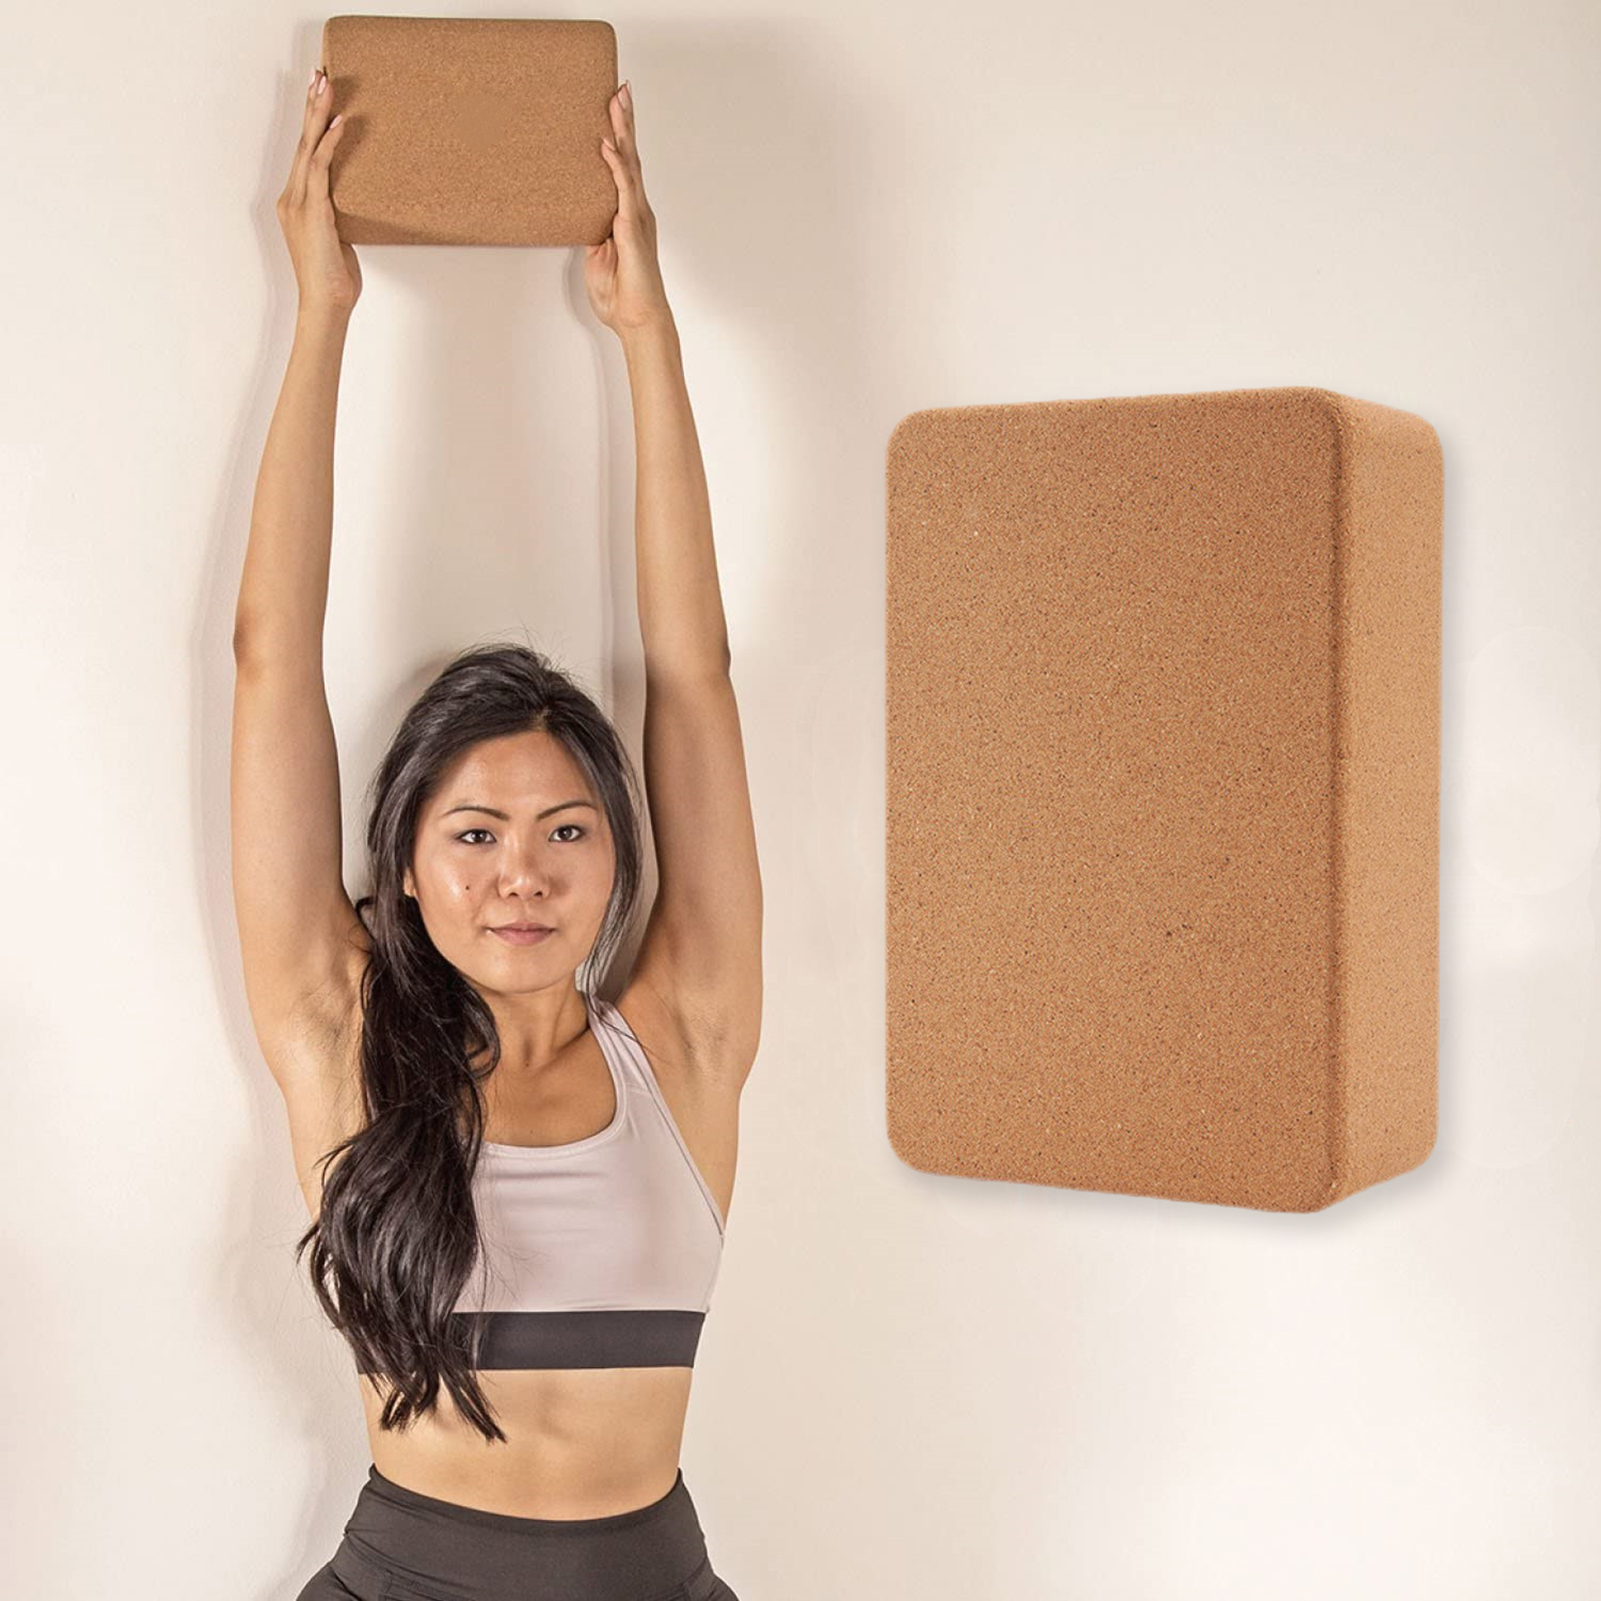 Ralapu Yoga Brick Premium Cork Yoga Block Non-slip Eco